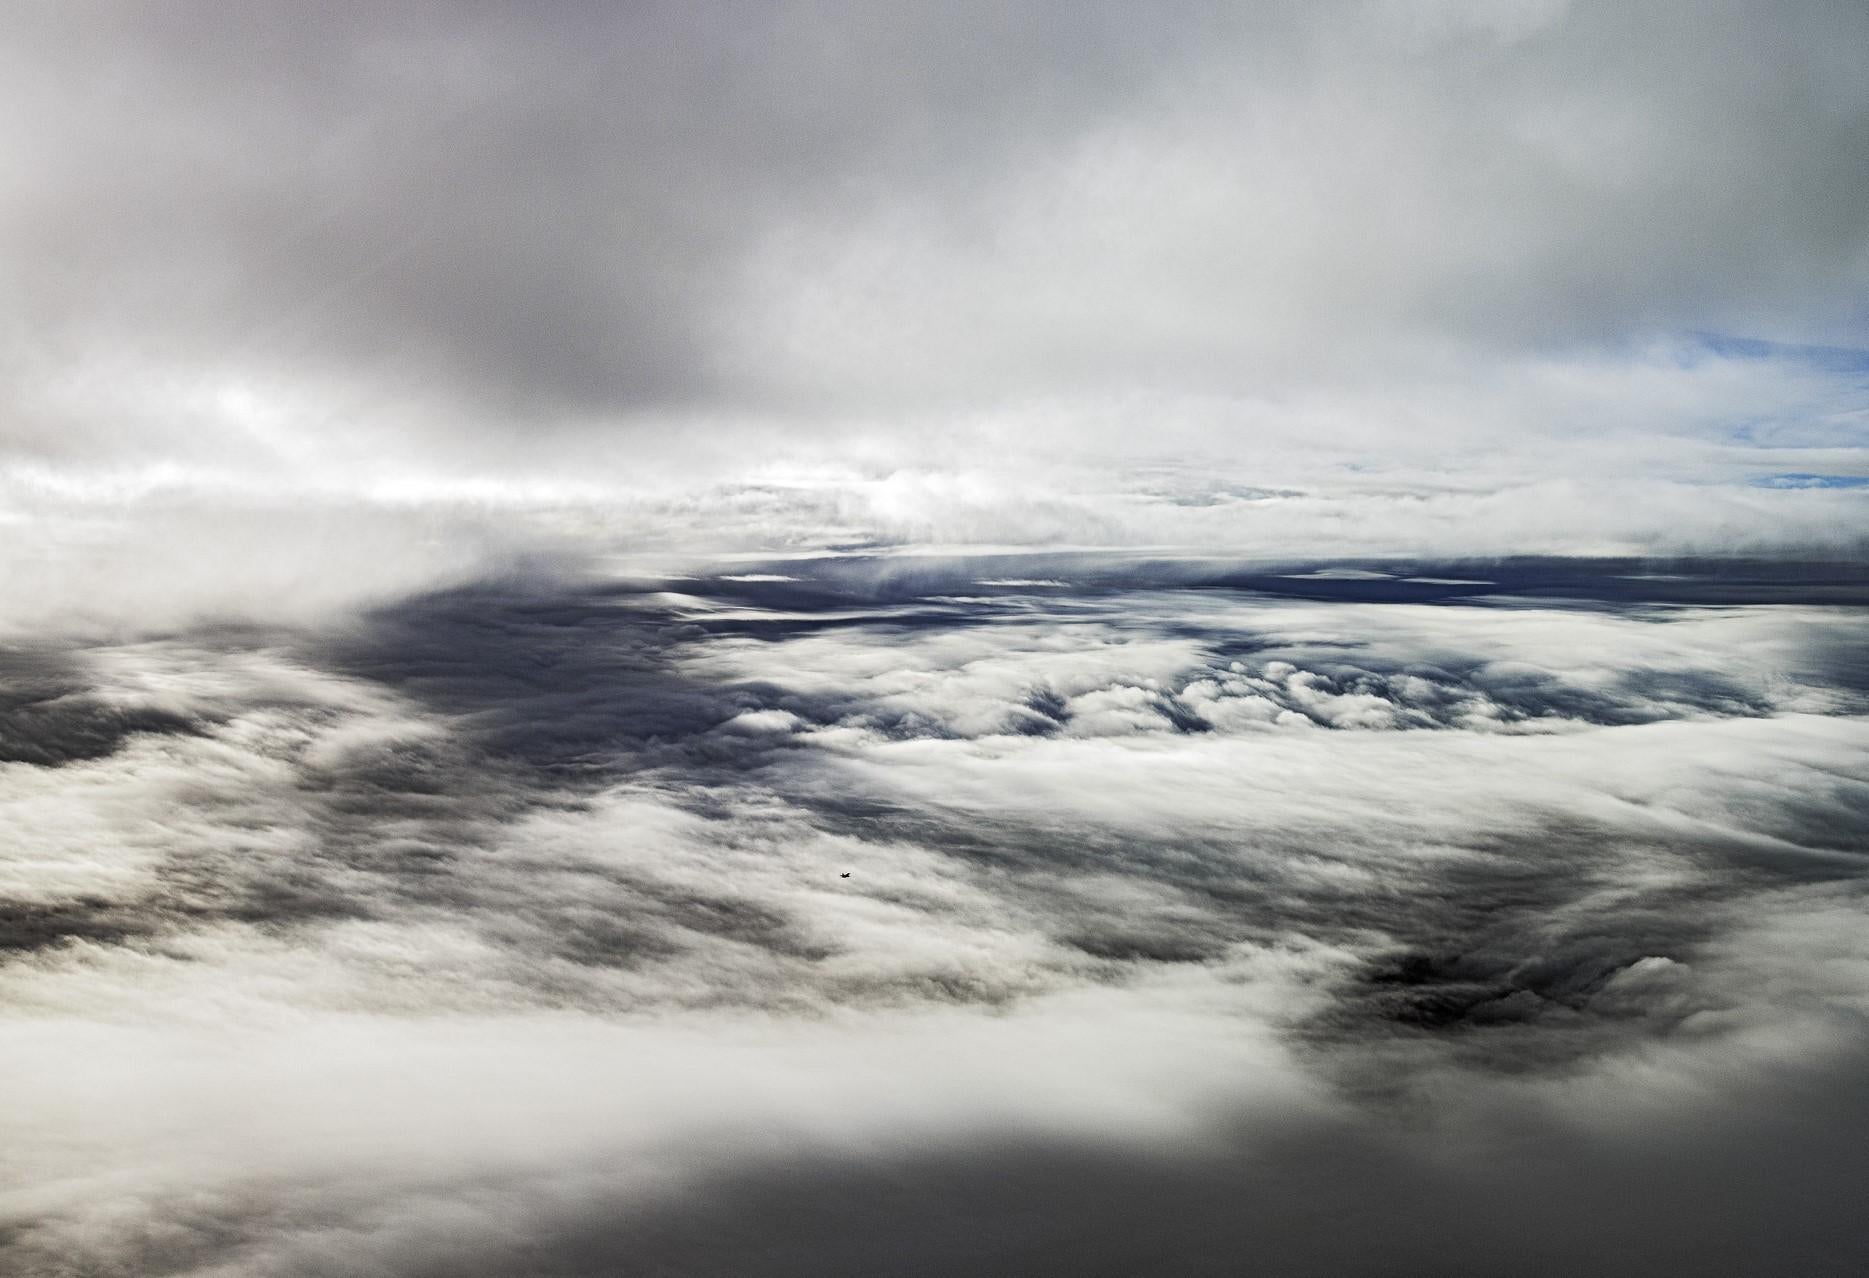 Stefan Darte Landscape Photograph - Lost in clouds, UK channel 2014 - # 1 / 7 Limited Edition Fine Art Photography